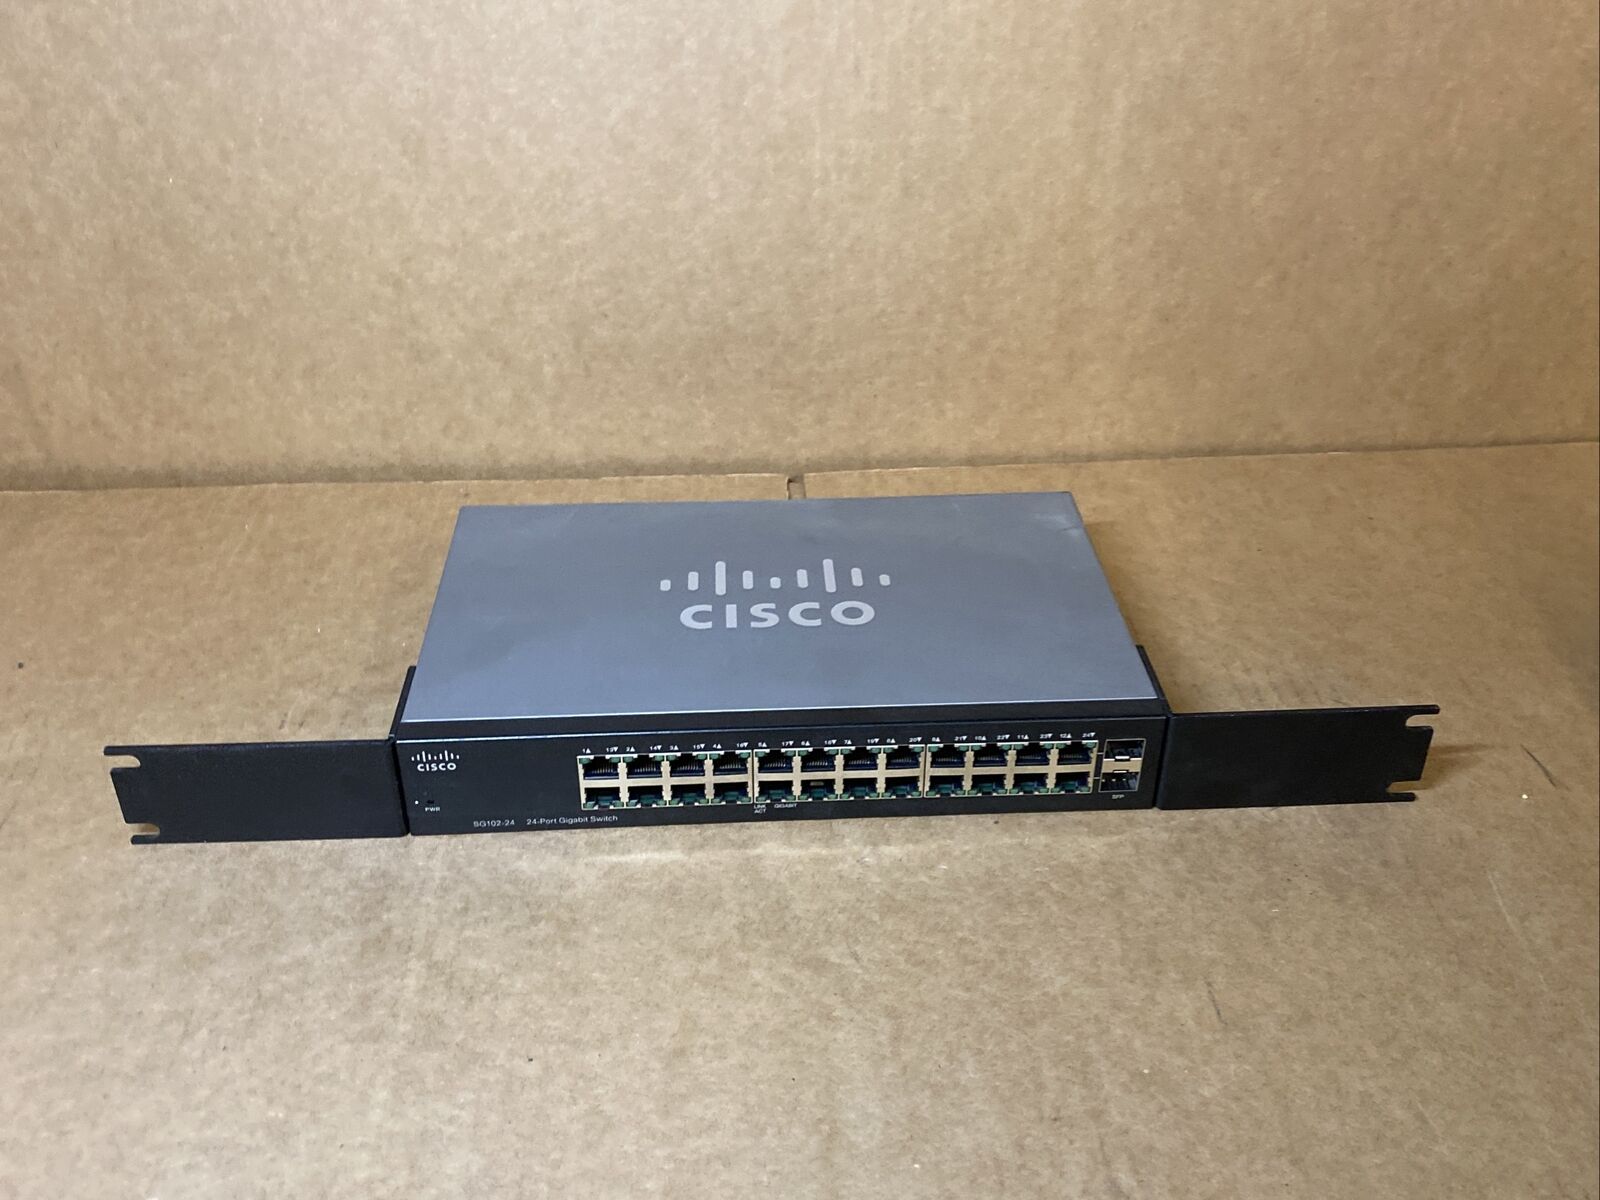 Cisco SG102-24 Small Business 24 Port Gigabit Ethernet Network Switch